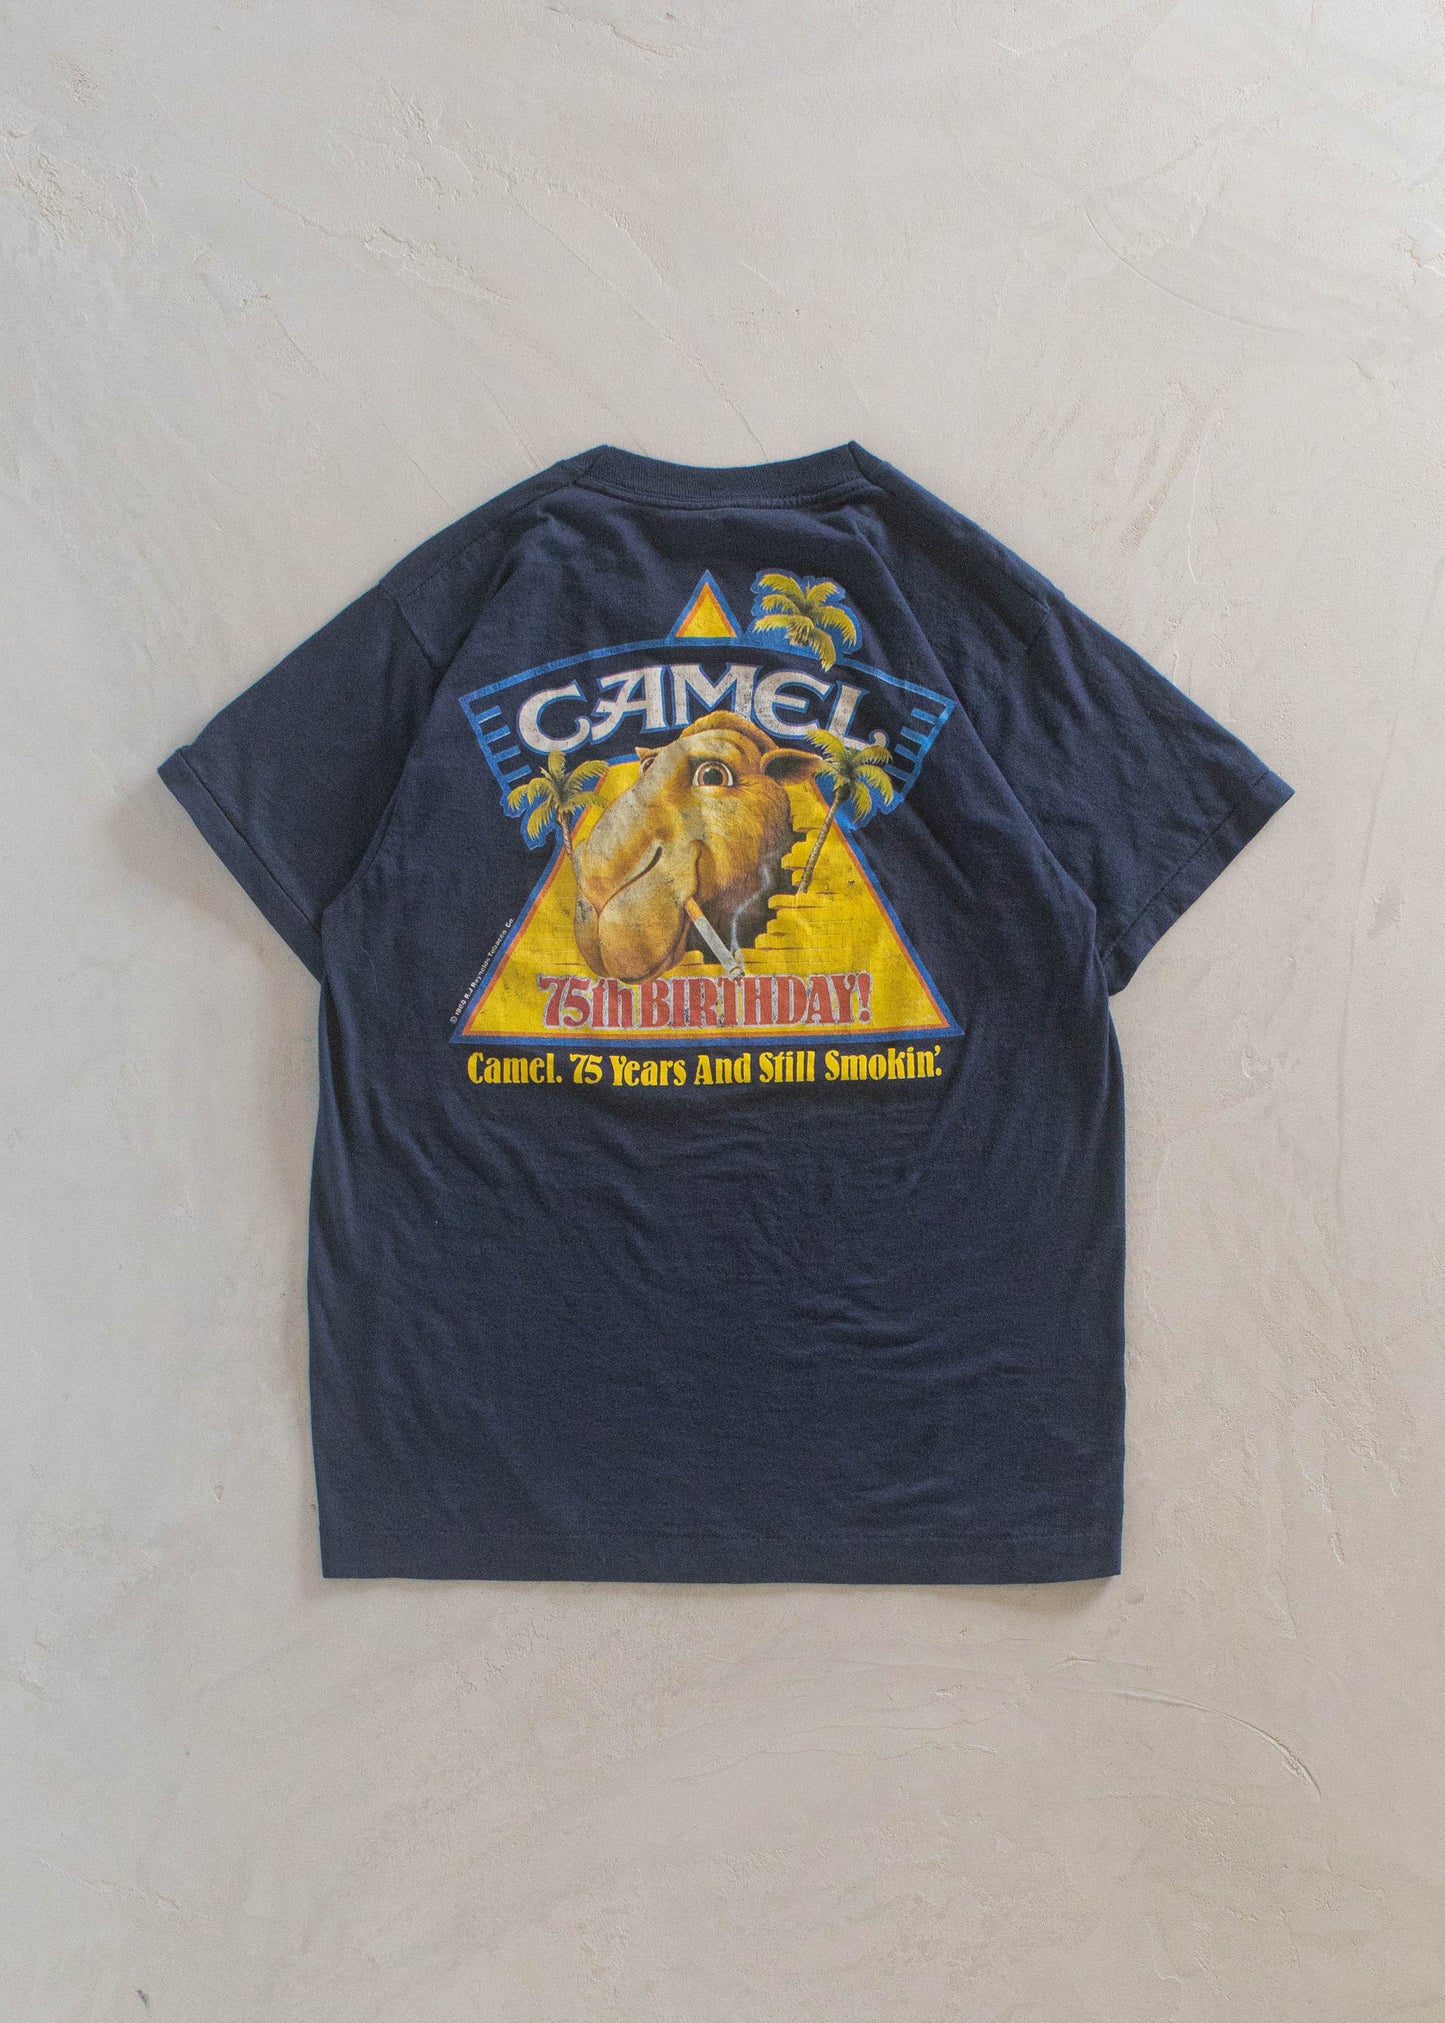 1988 Camel T-Shirt Size S/M